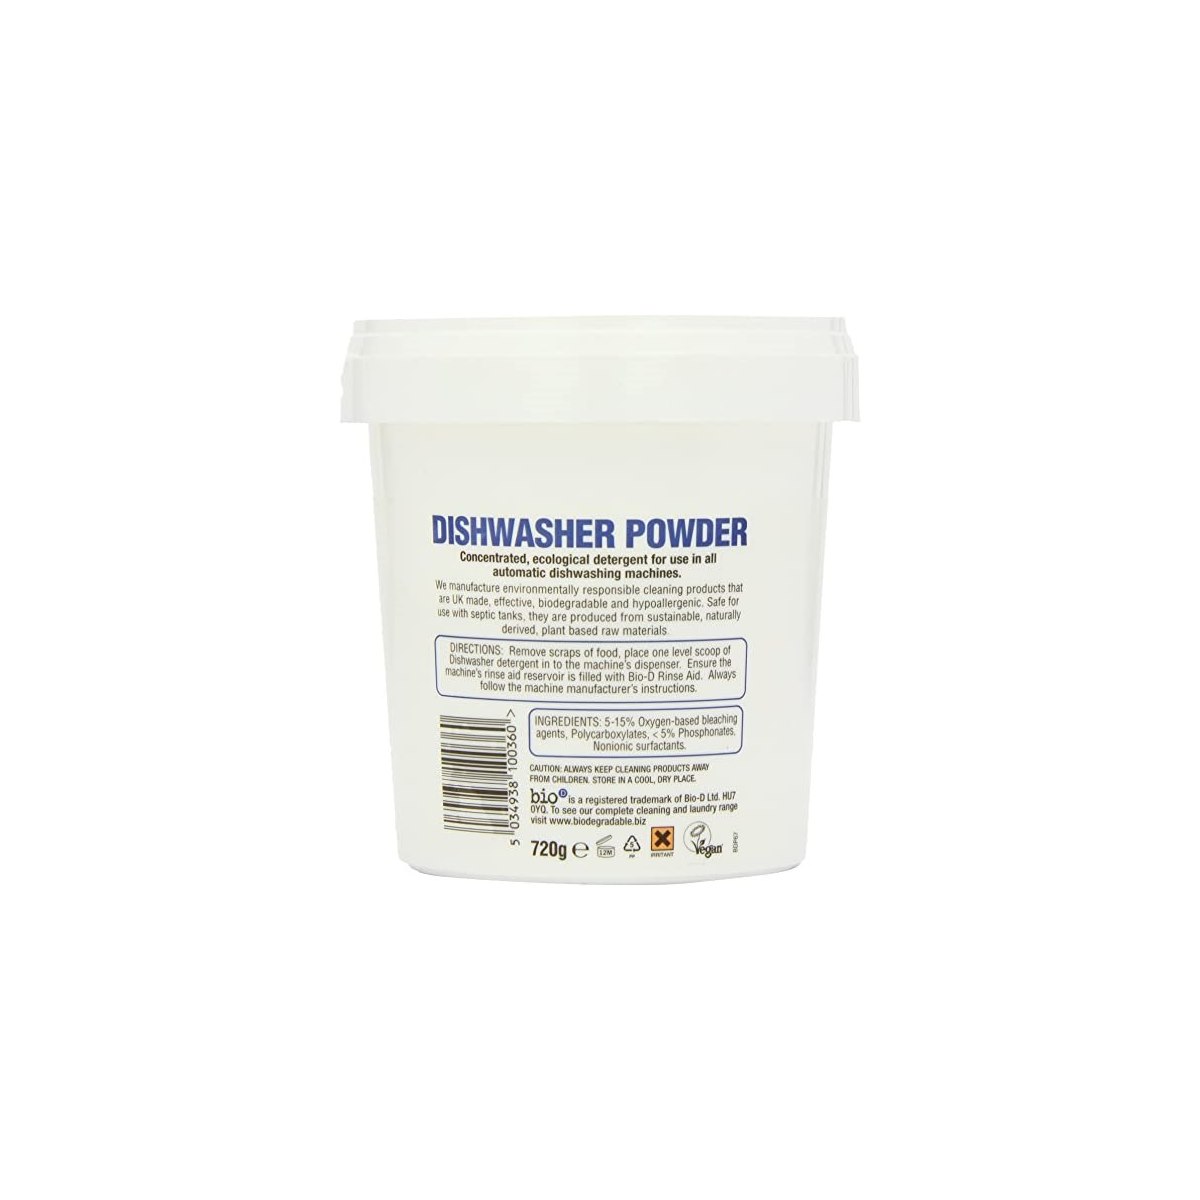 Bio-D Dishwasher Powder Usage Instructions